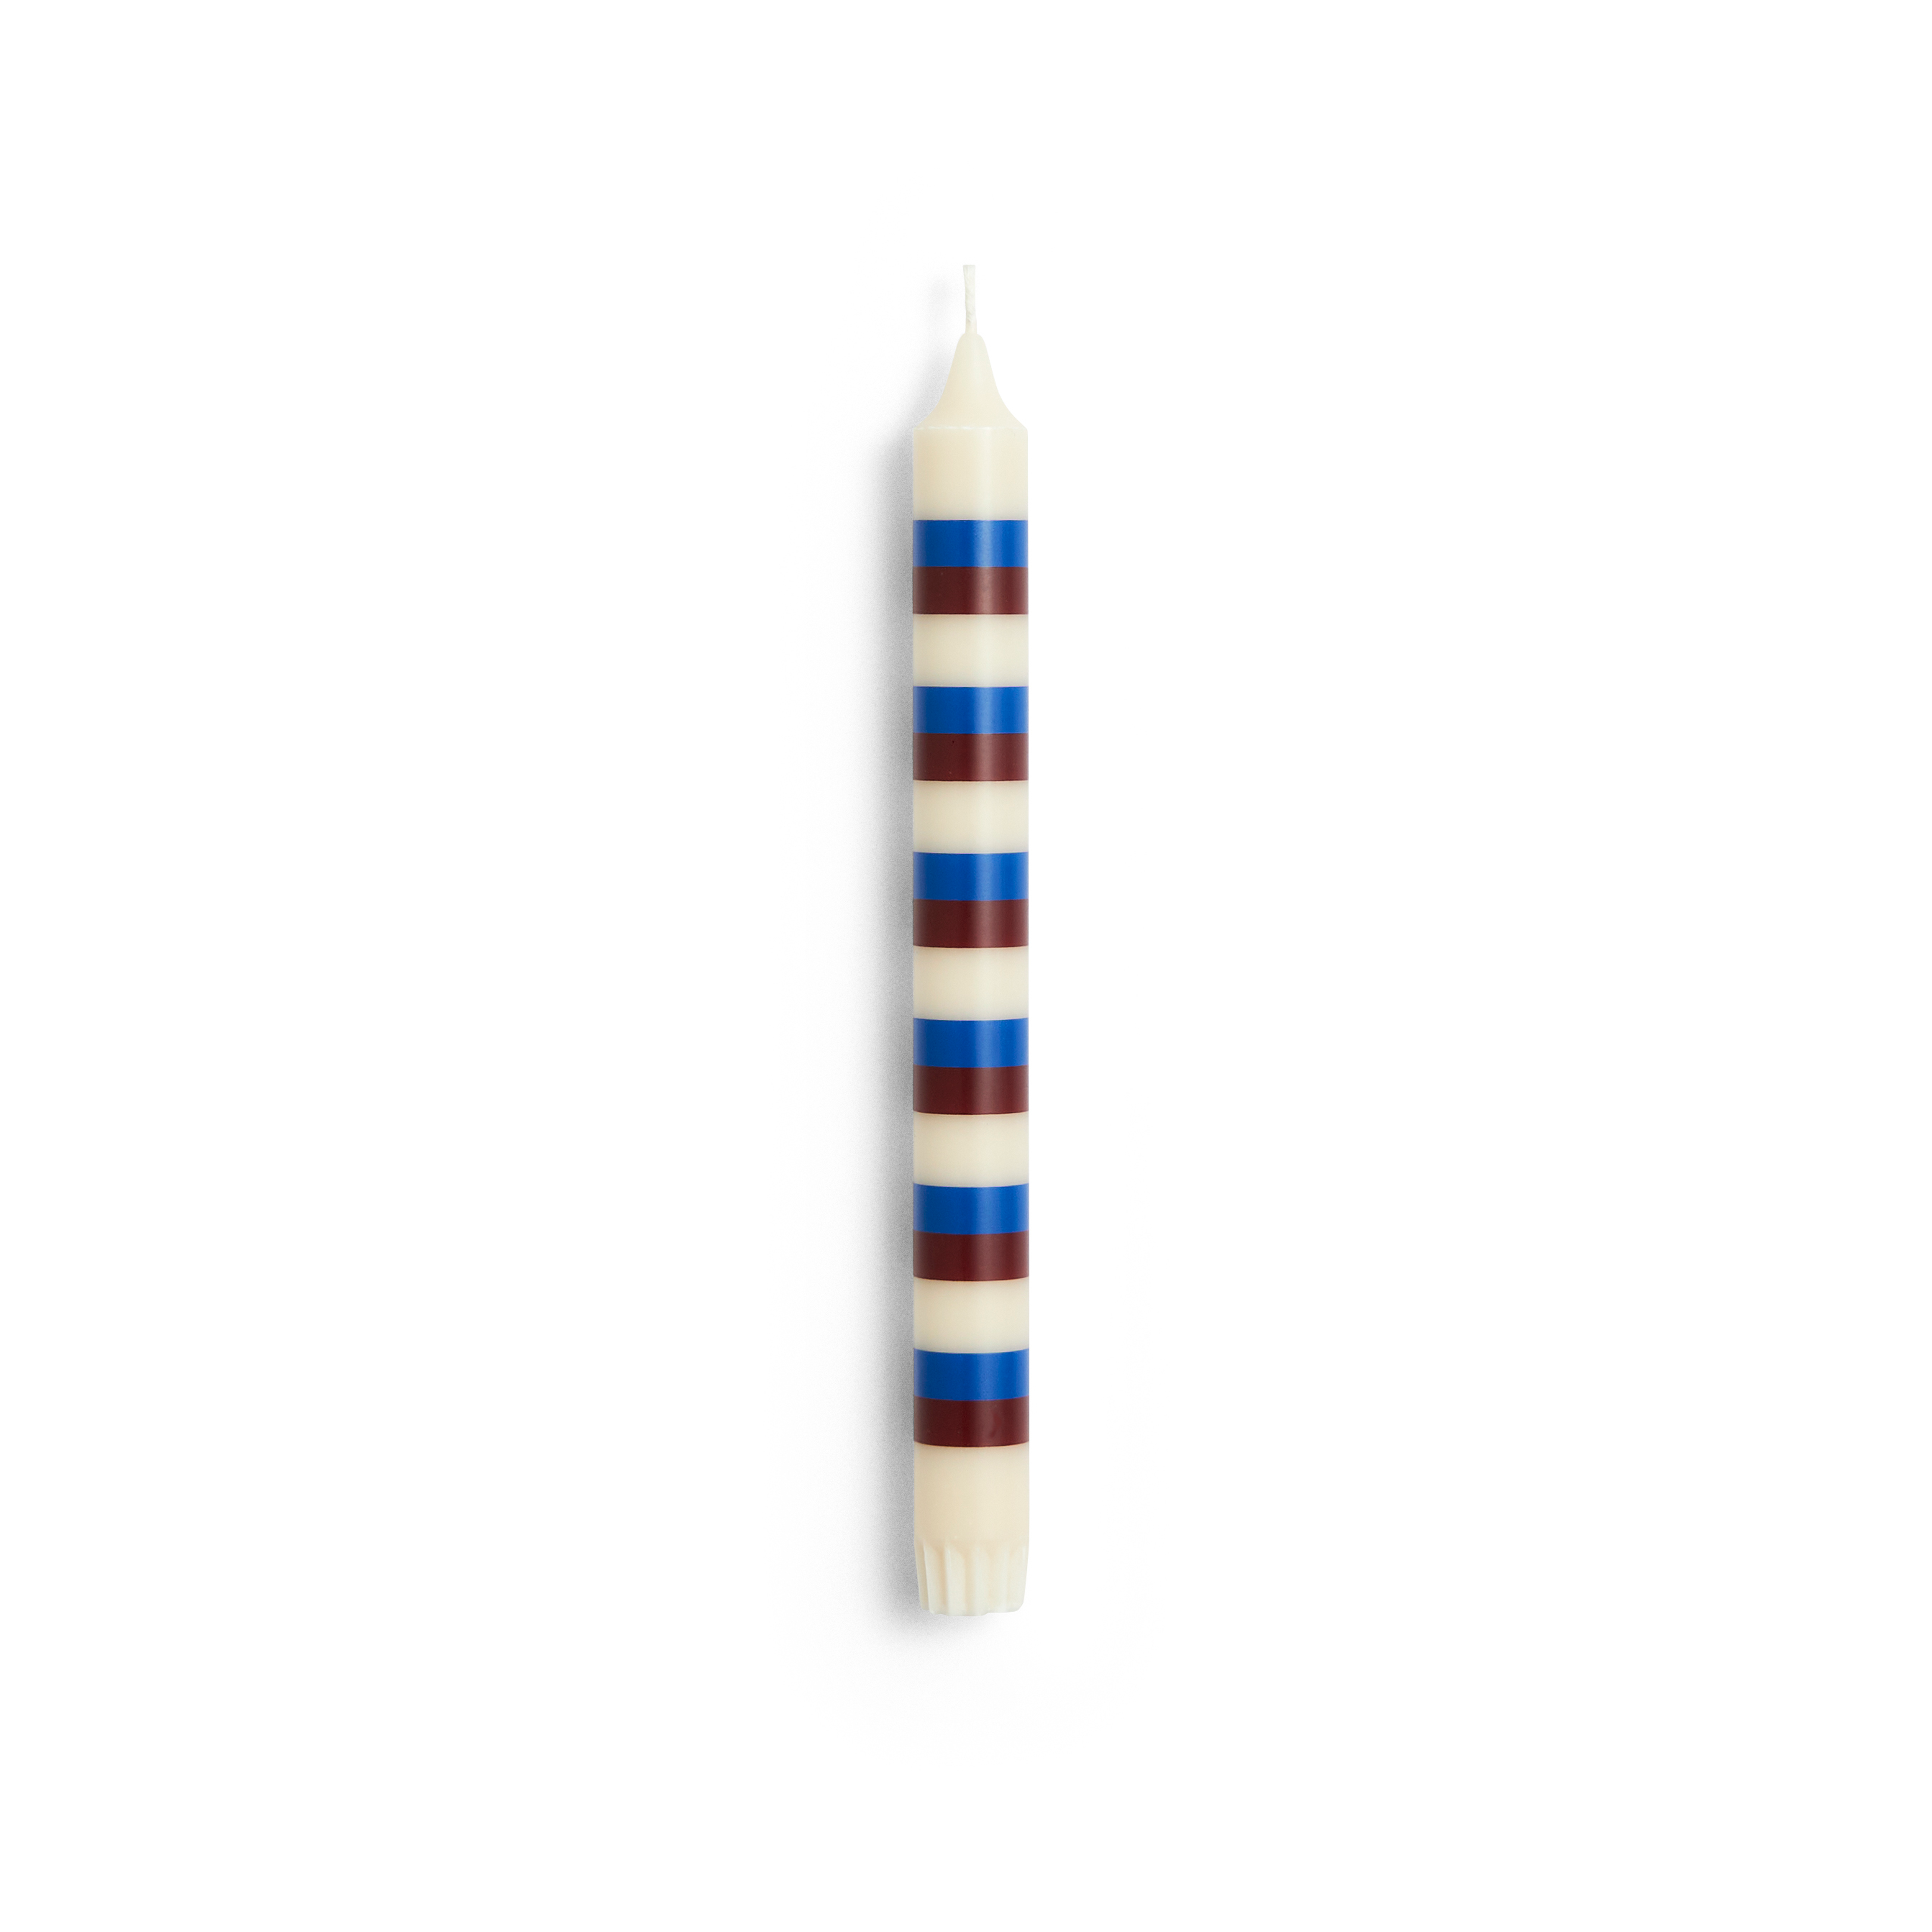 Candele lunghe bicolore Affinity, confezione da 4, lunghezza 32 cm da  Scandi Essentials →